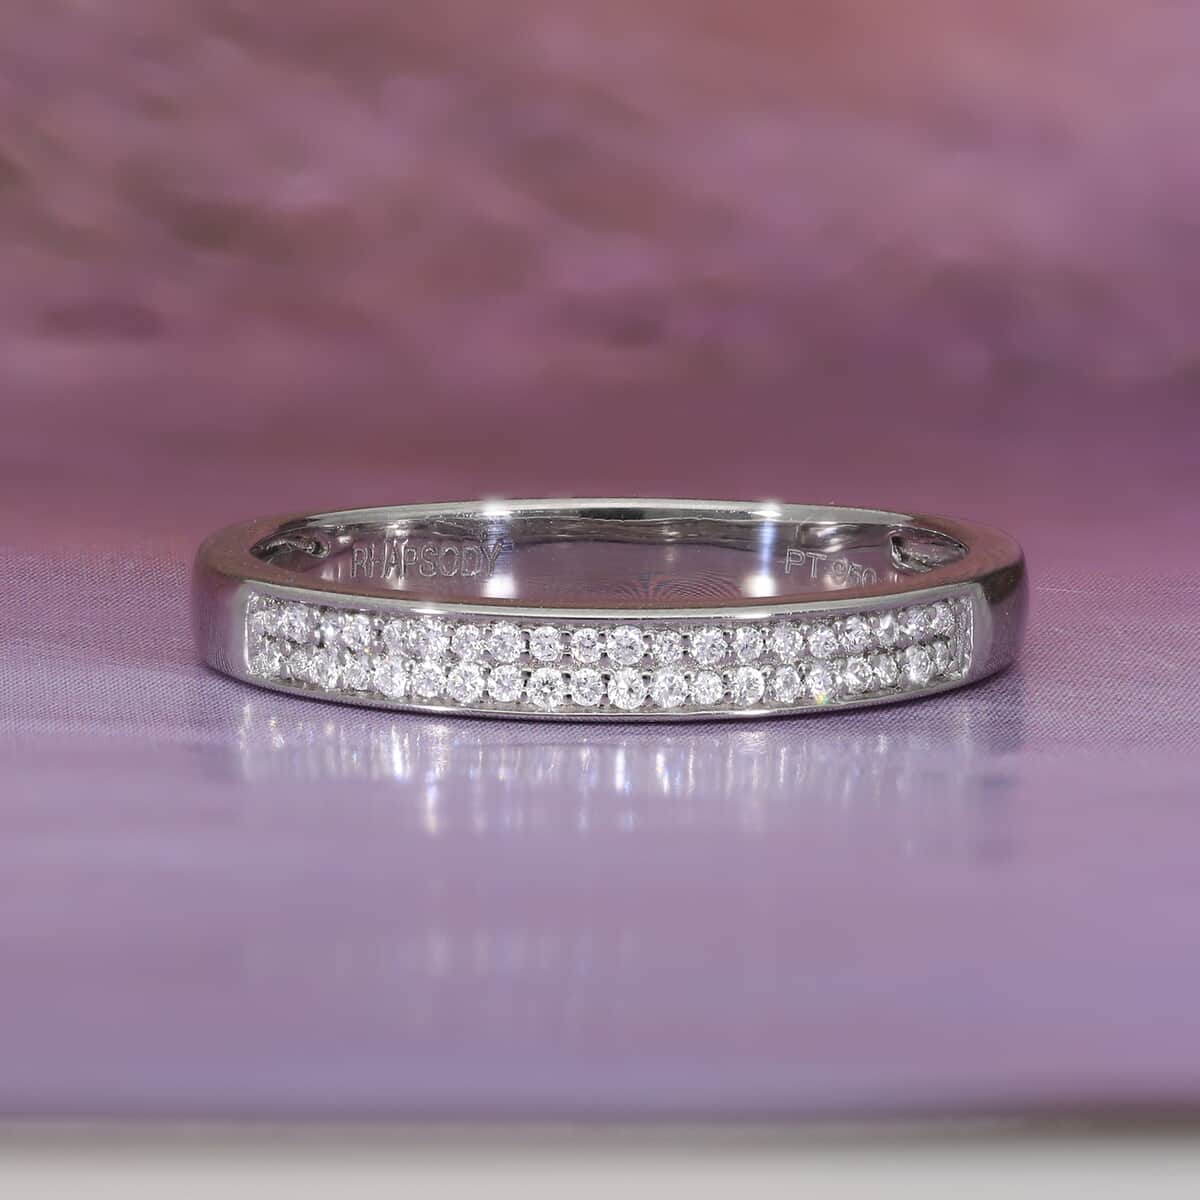 RHAPSODY IGI Certified 950 Platinum Diamond (E-F, VS) Ring (Size 9.0) (5 g) 0.18 ctw image number 1